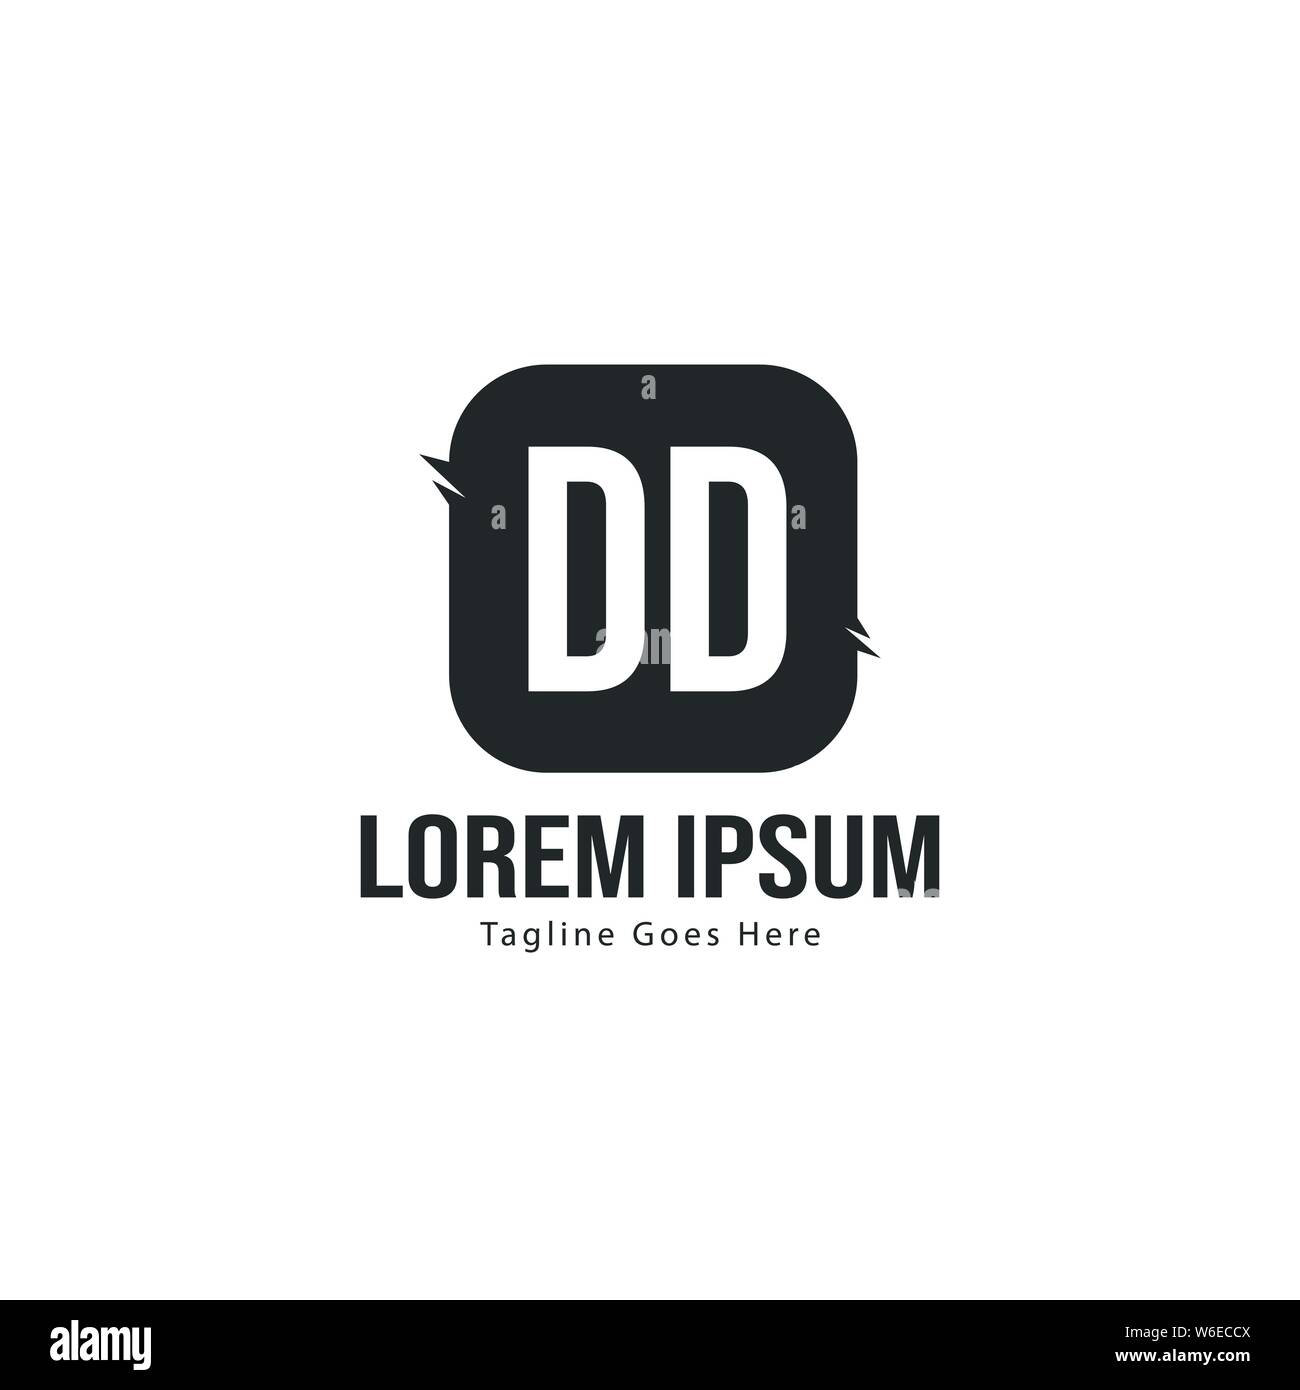 DD Letter Logo Design. Creative Modern DD Letters Icon Illustration ...